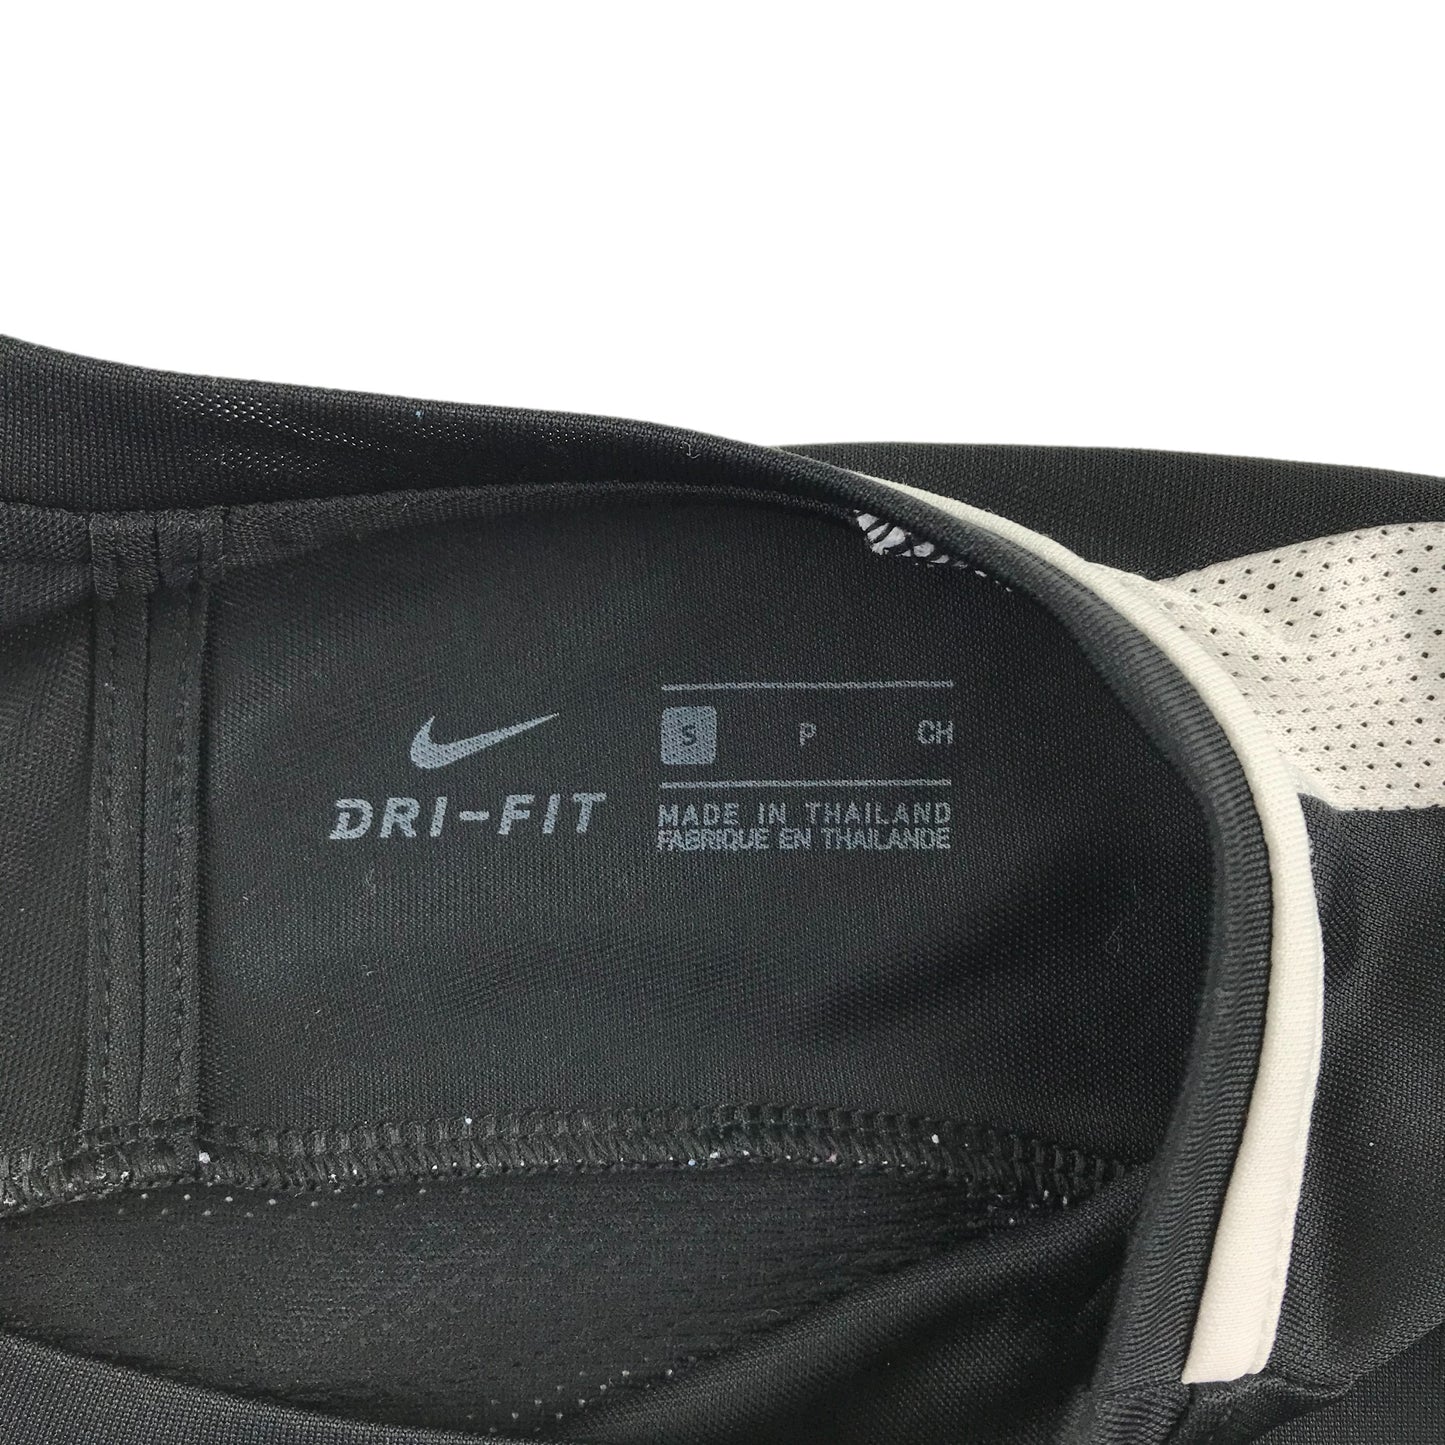 Nike Sport Top Size S Black Plain Short Sleeve